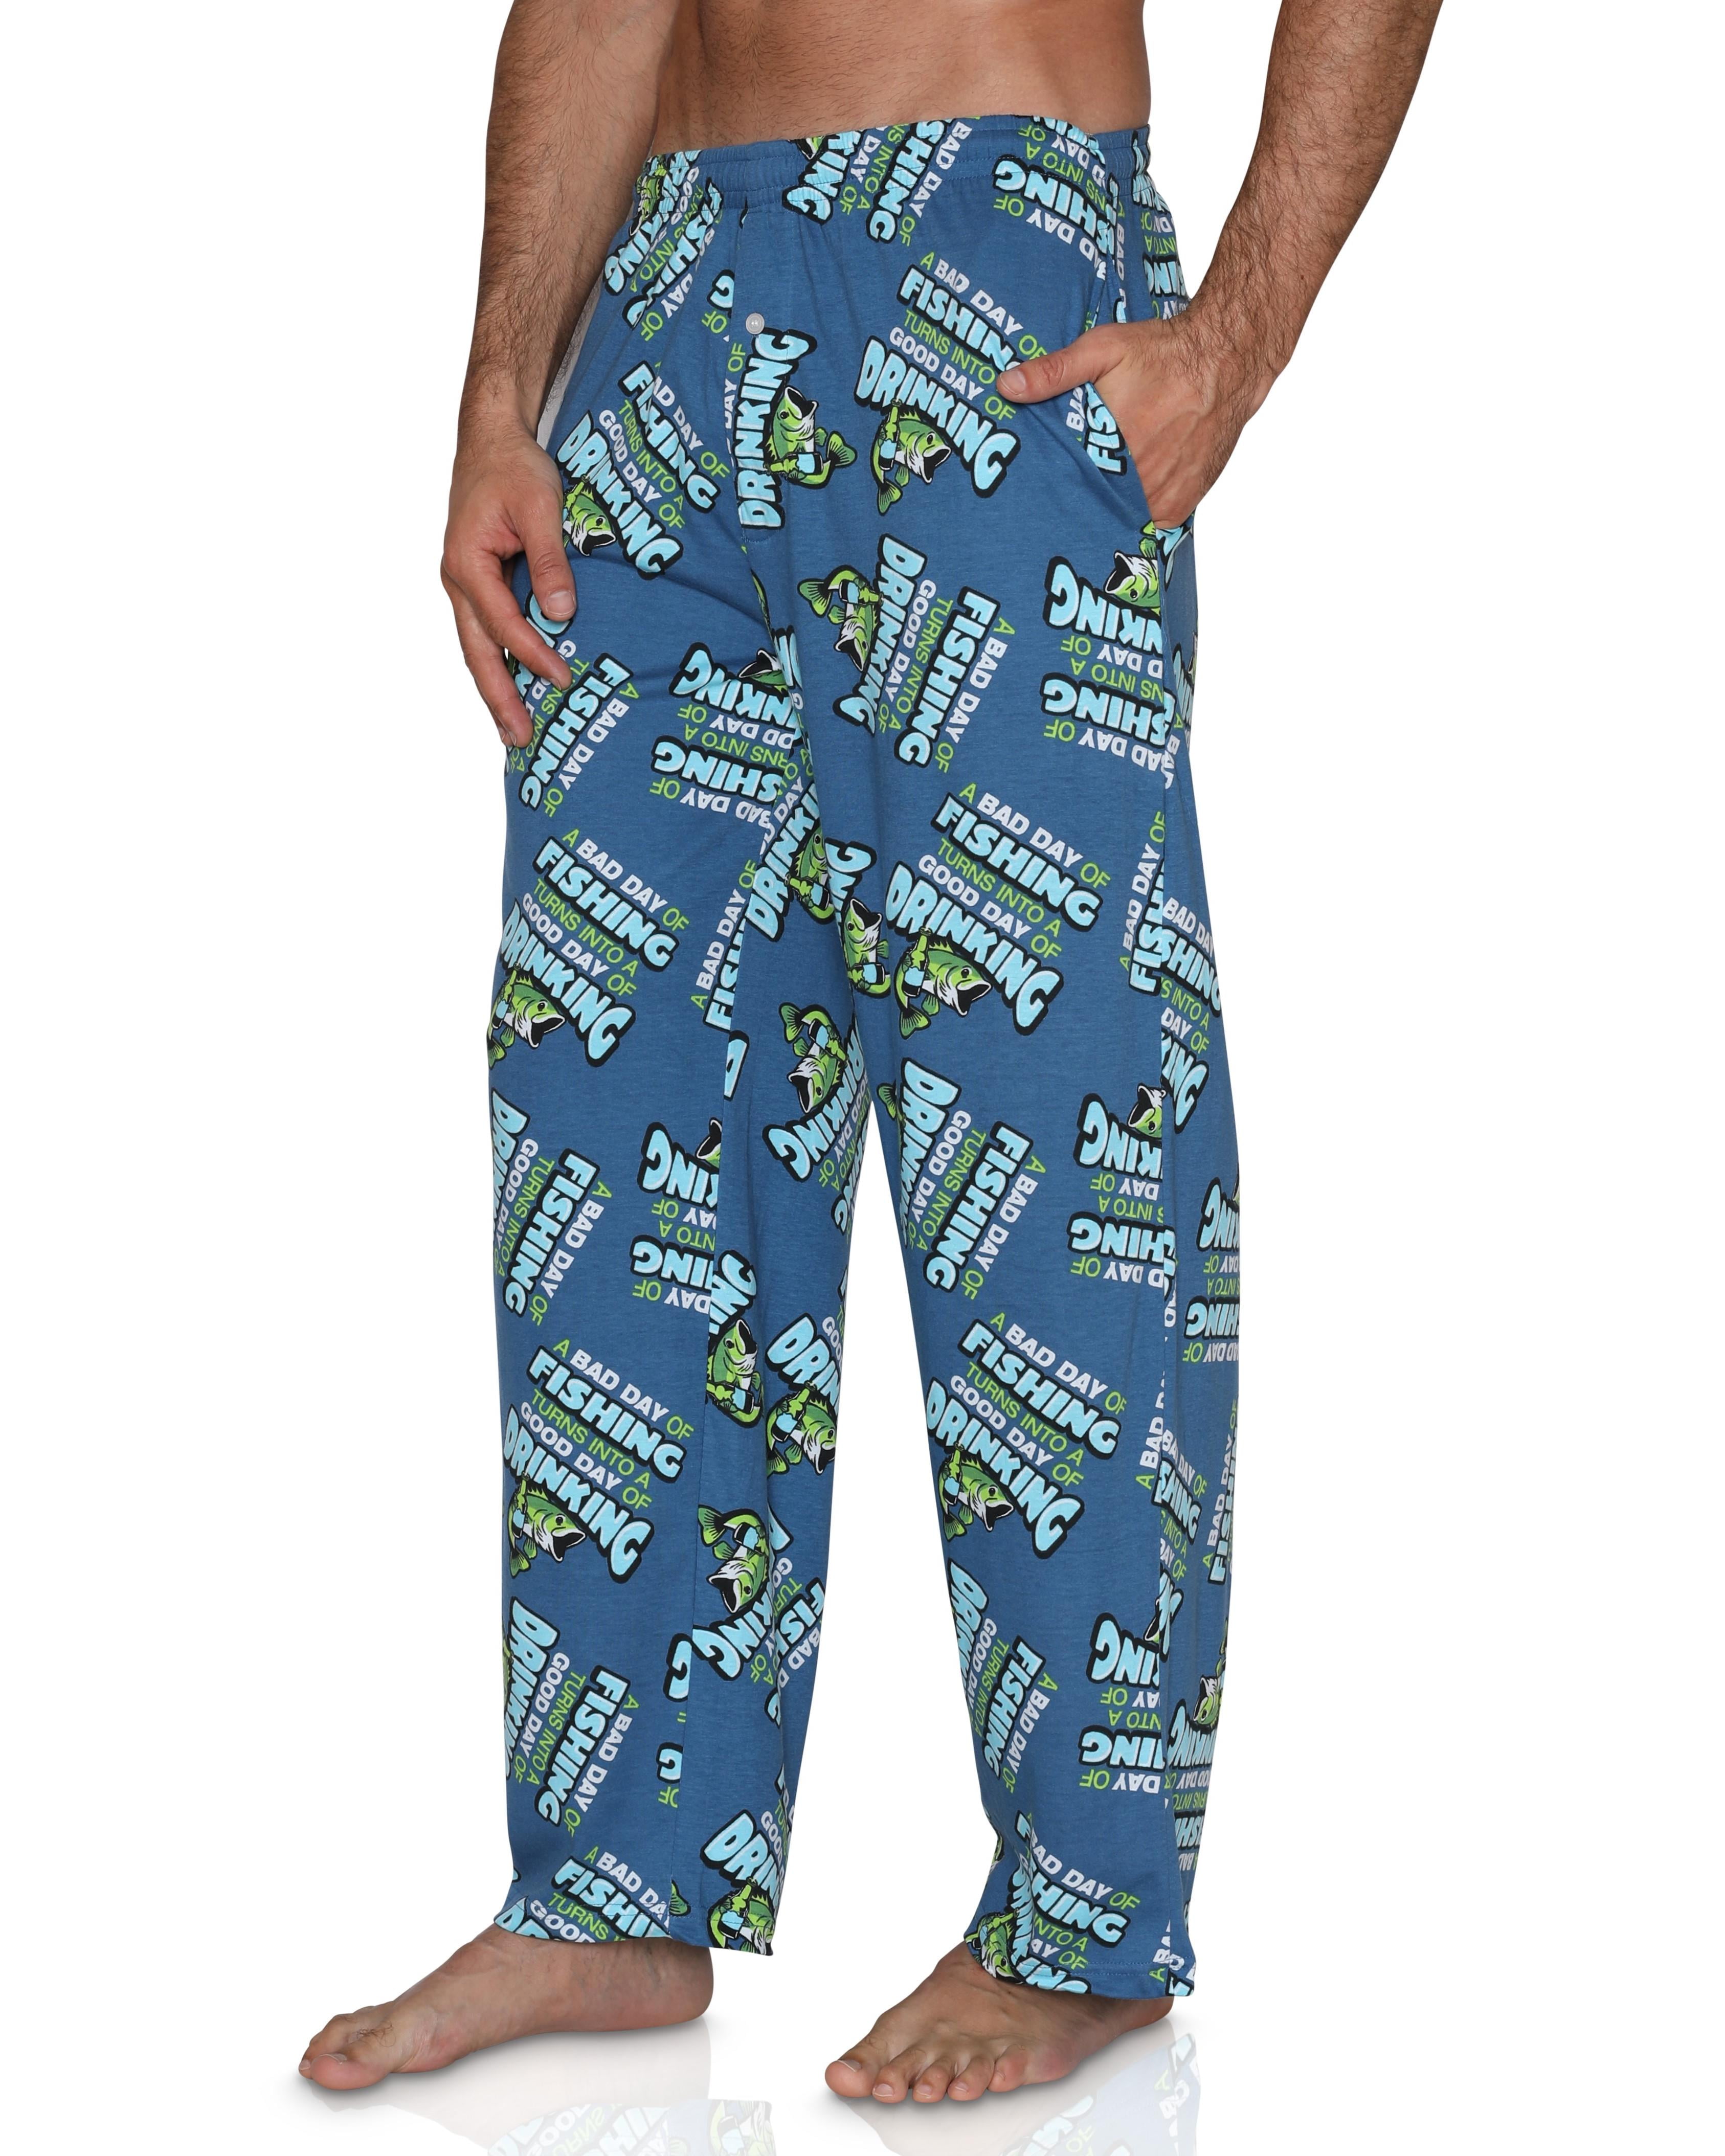 80s Or 90s Men's Pajama Pants Lounge Sleep Bottoms Funny PJ Pants Sleepwear  for Men at Amazon Men's Clothing store